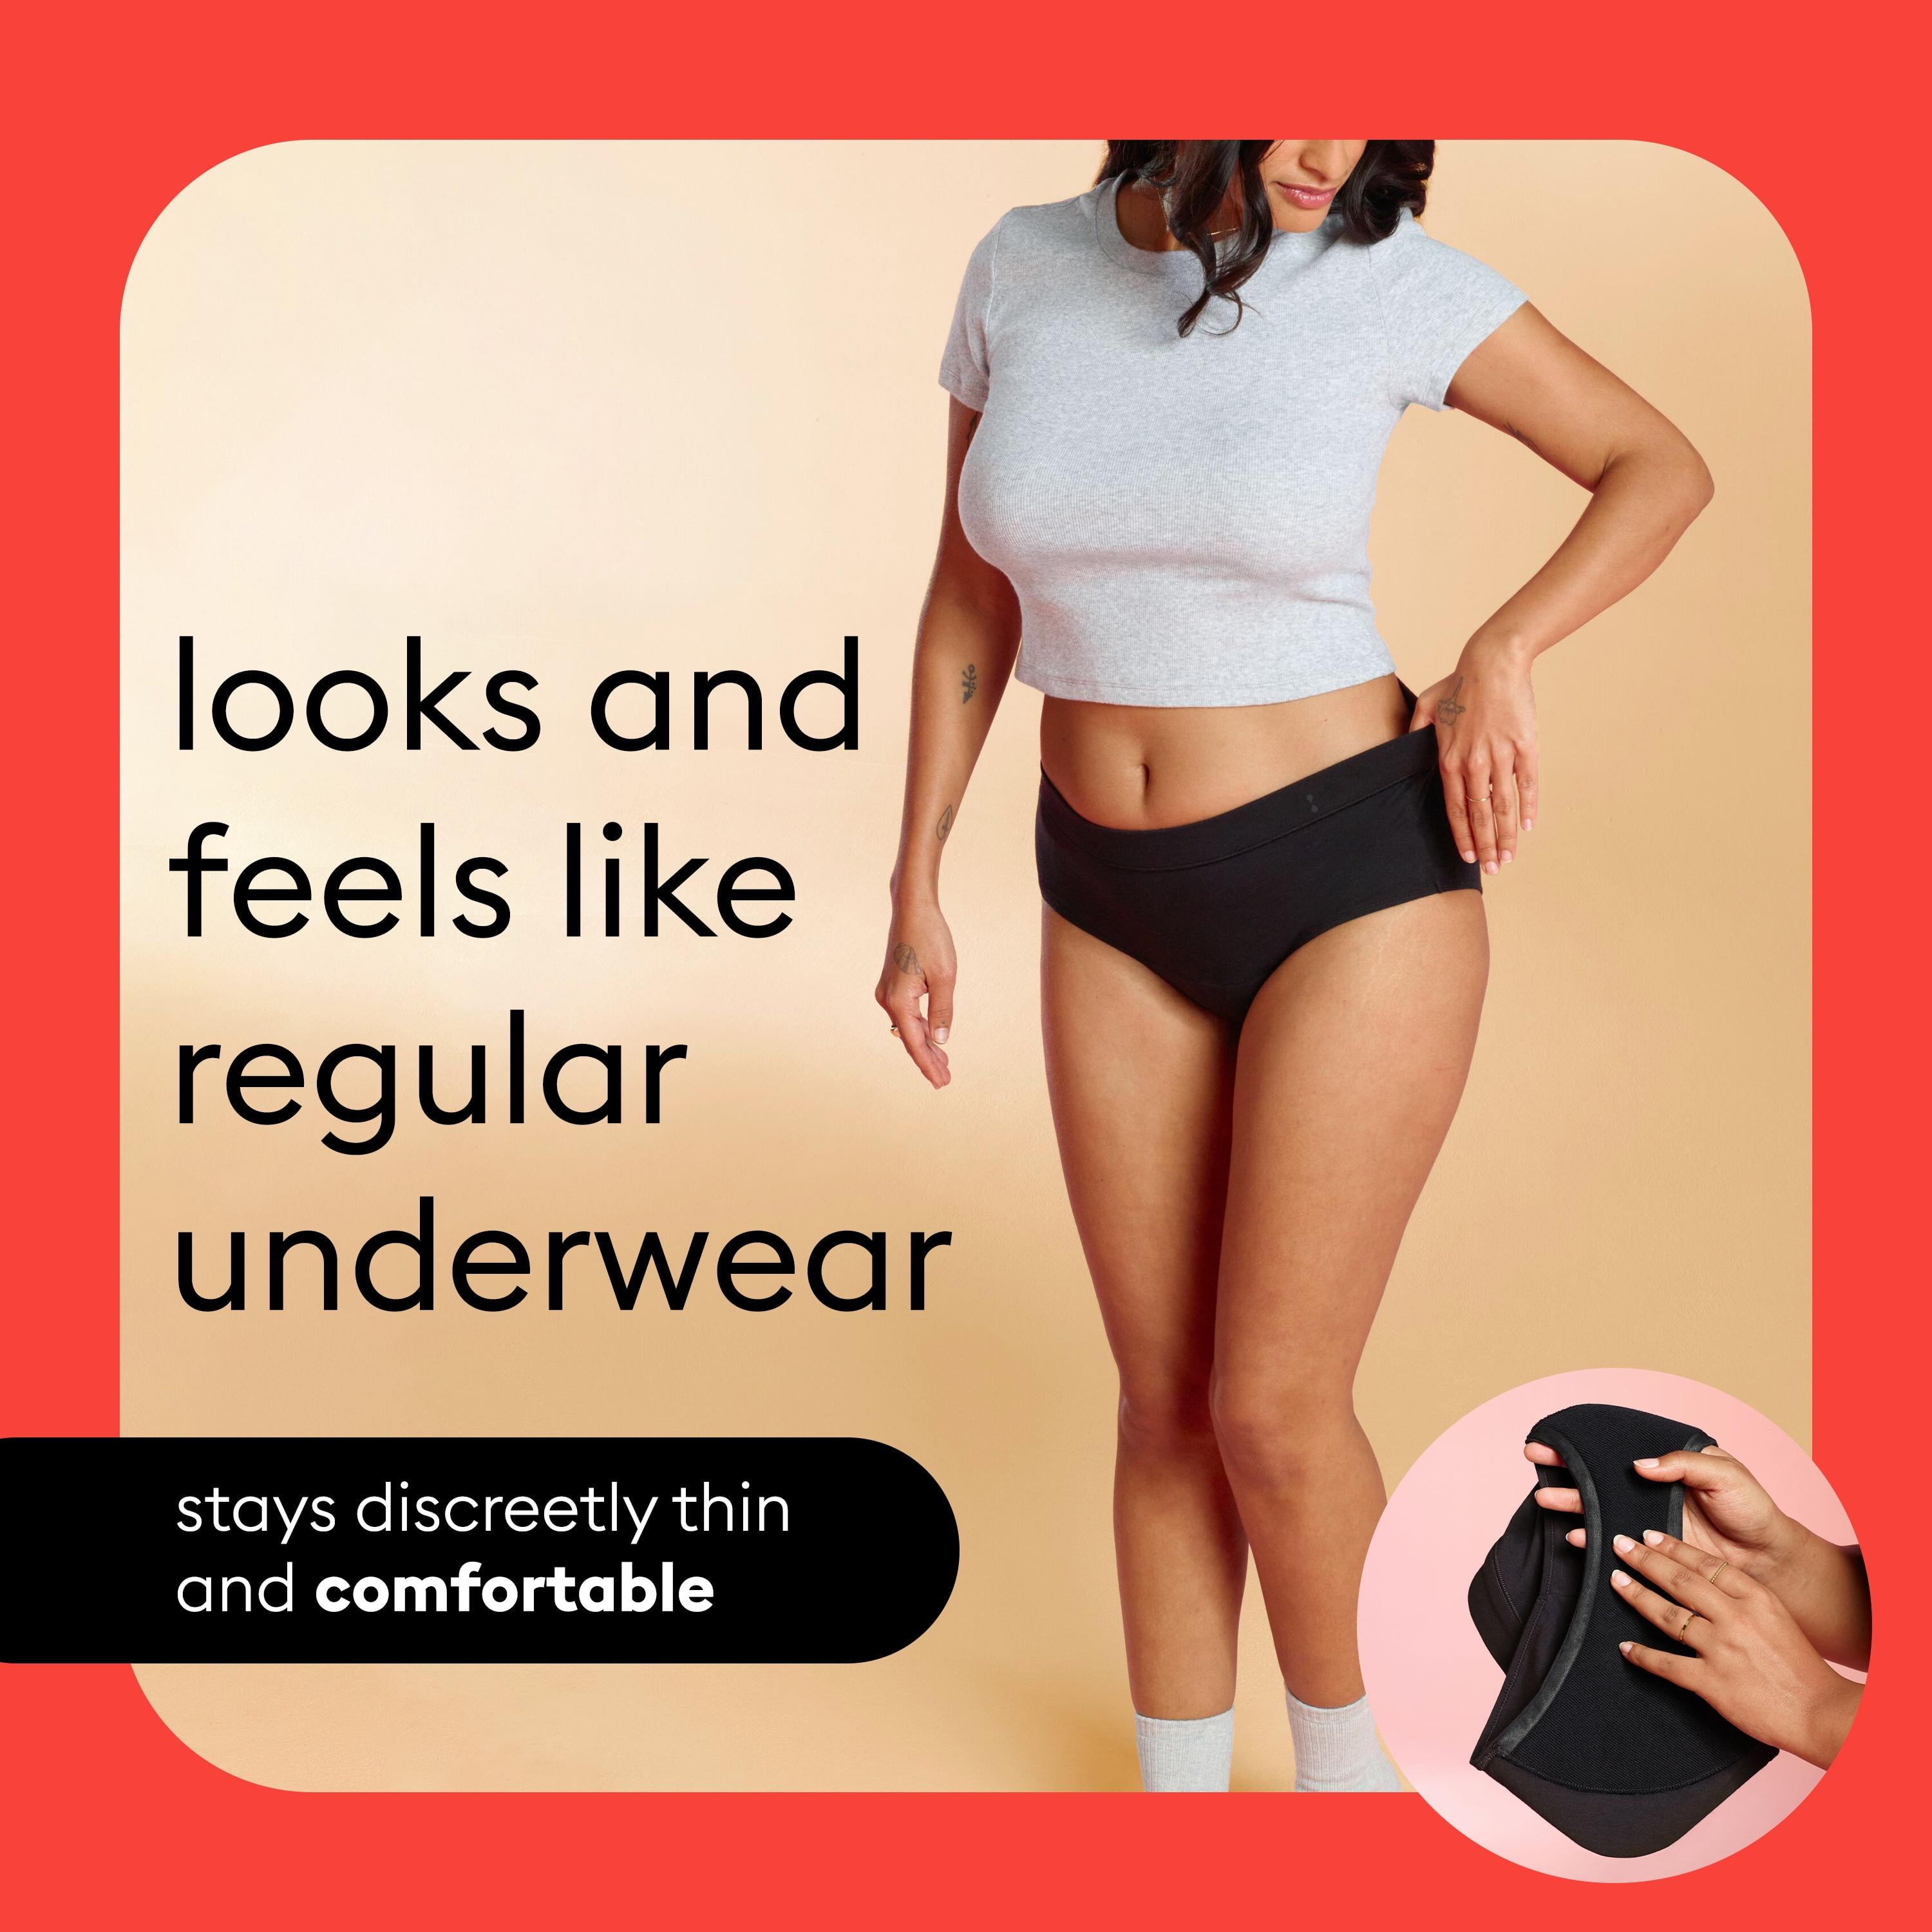 Thinx for All Women's Super Absorbency Brief Period Underwear - Black S -  NEW